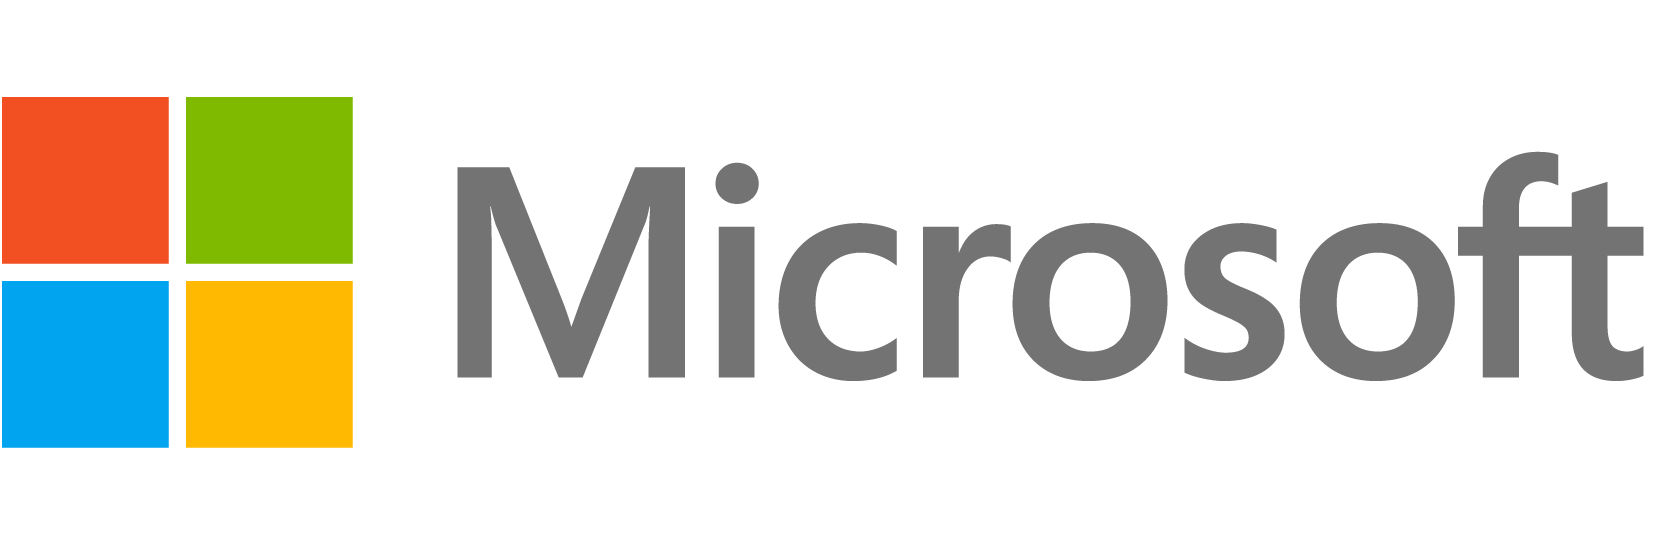 Microsoft-Logo-1